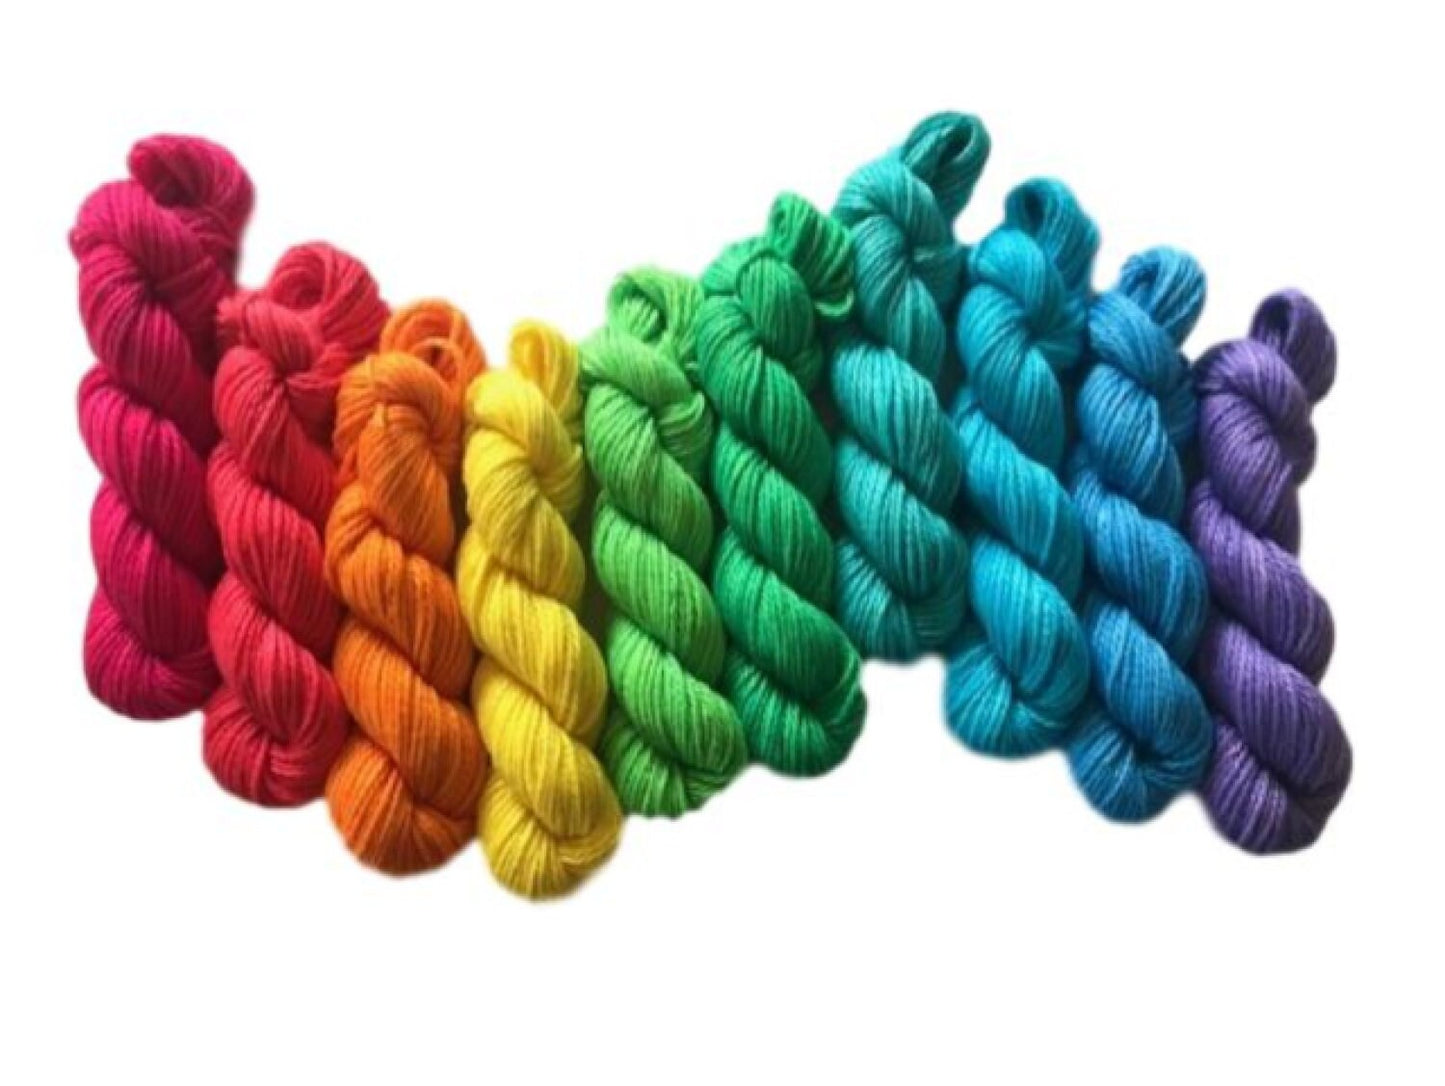 Rainbow Vegan Yarn Kit - DK Hand Dyed Semi Solid Mini Skeins - 10 Colors (53 yd skeins) - Bamboo Cotton Artisan Tonal Yarn - 3 Ply Sport Wt